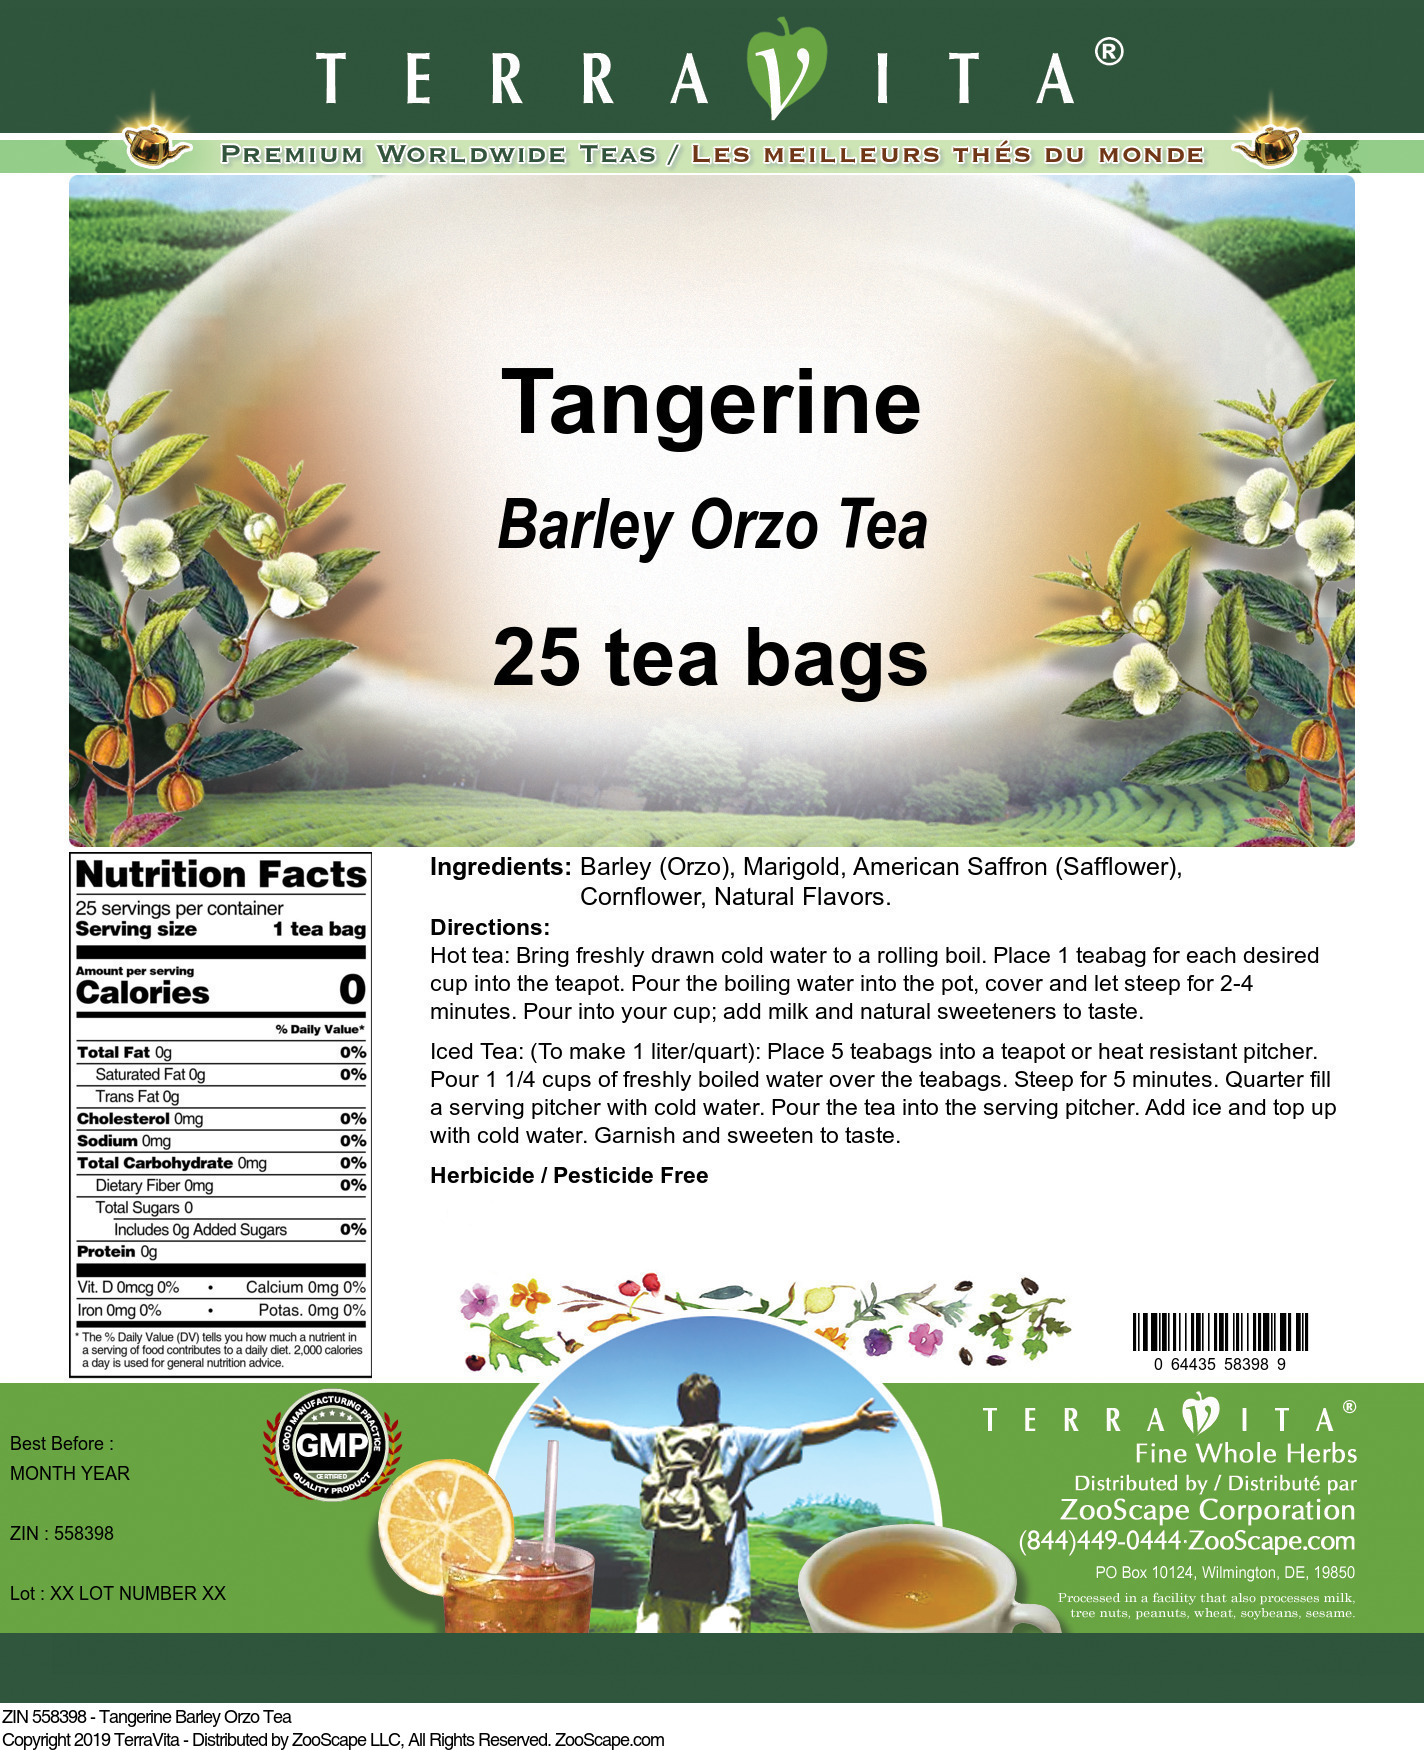 Tangerine Barley Orzo Tea - Label